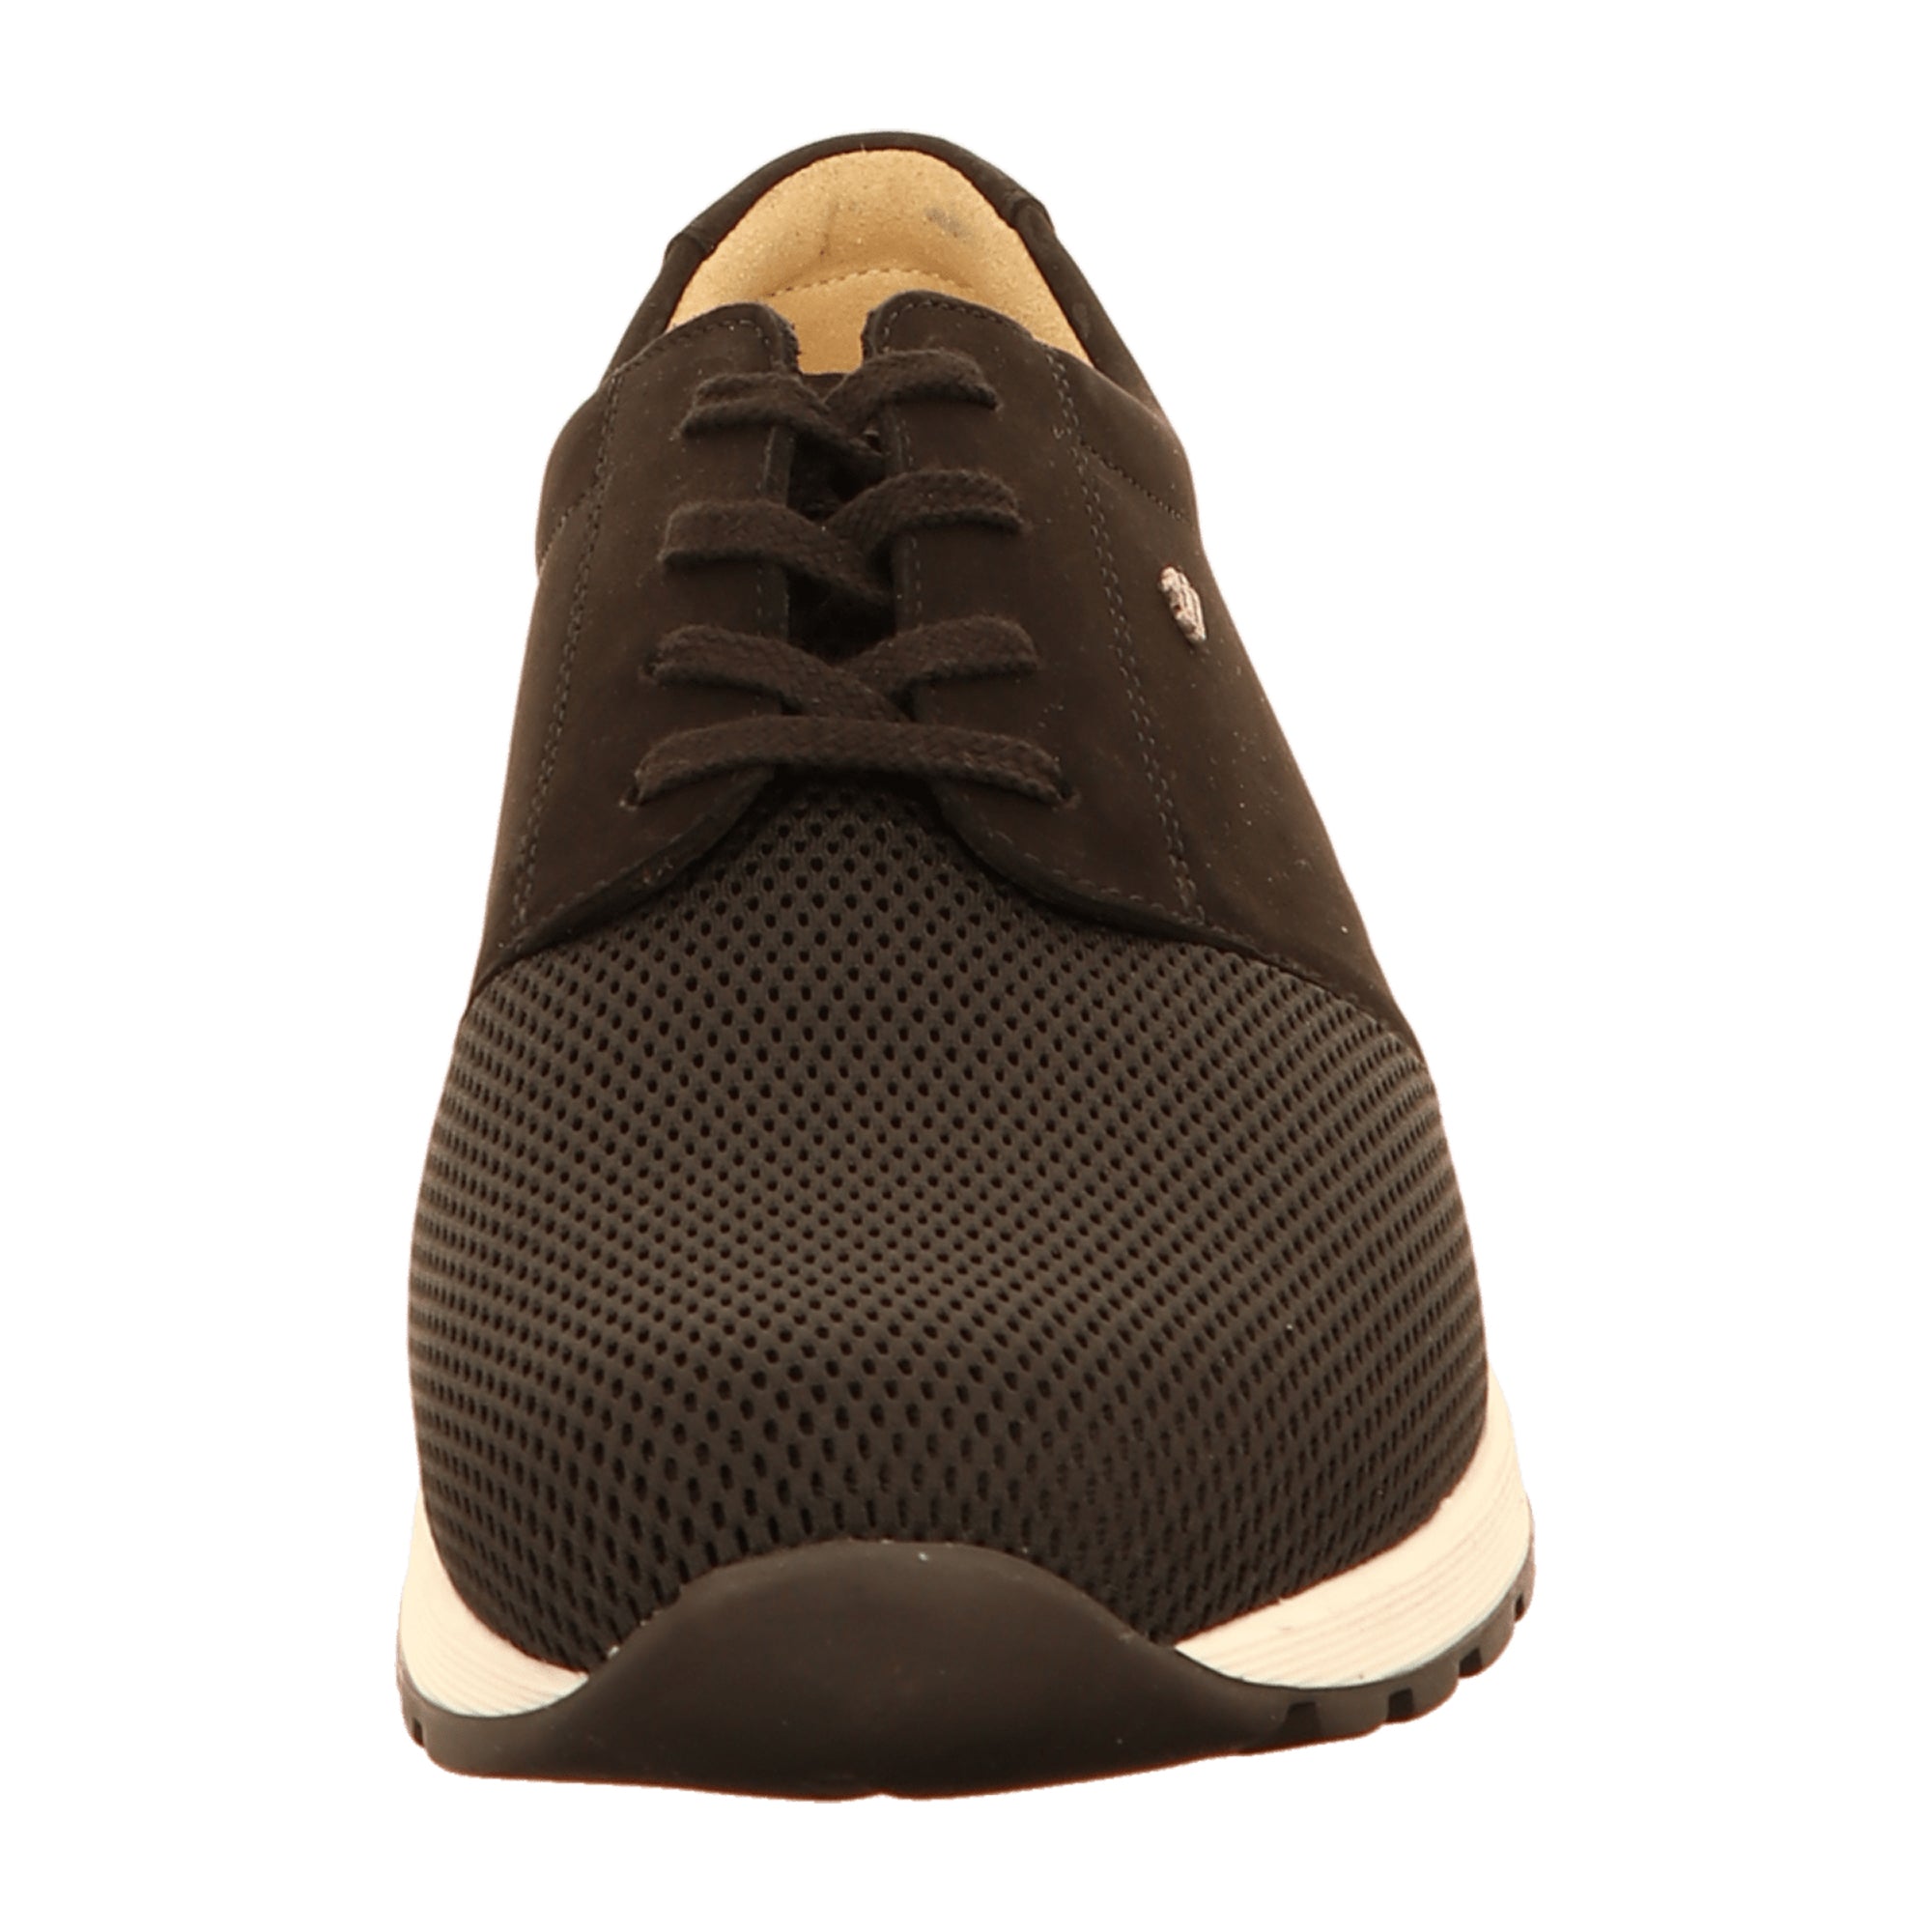 Finn Comfort Enfield Men’s Black Leather Shoes - Stylish & Durable